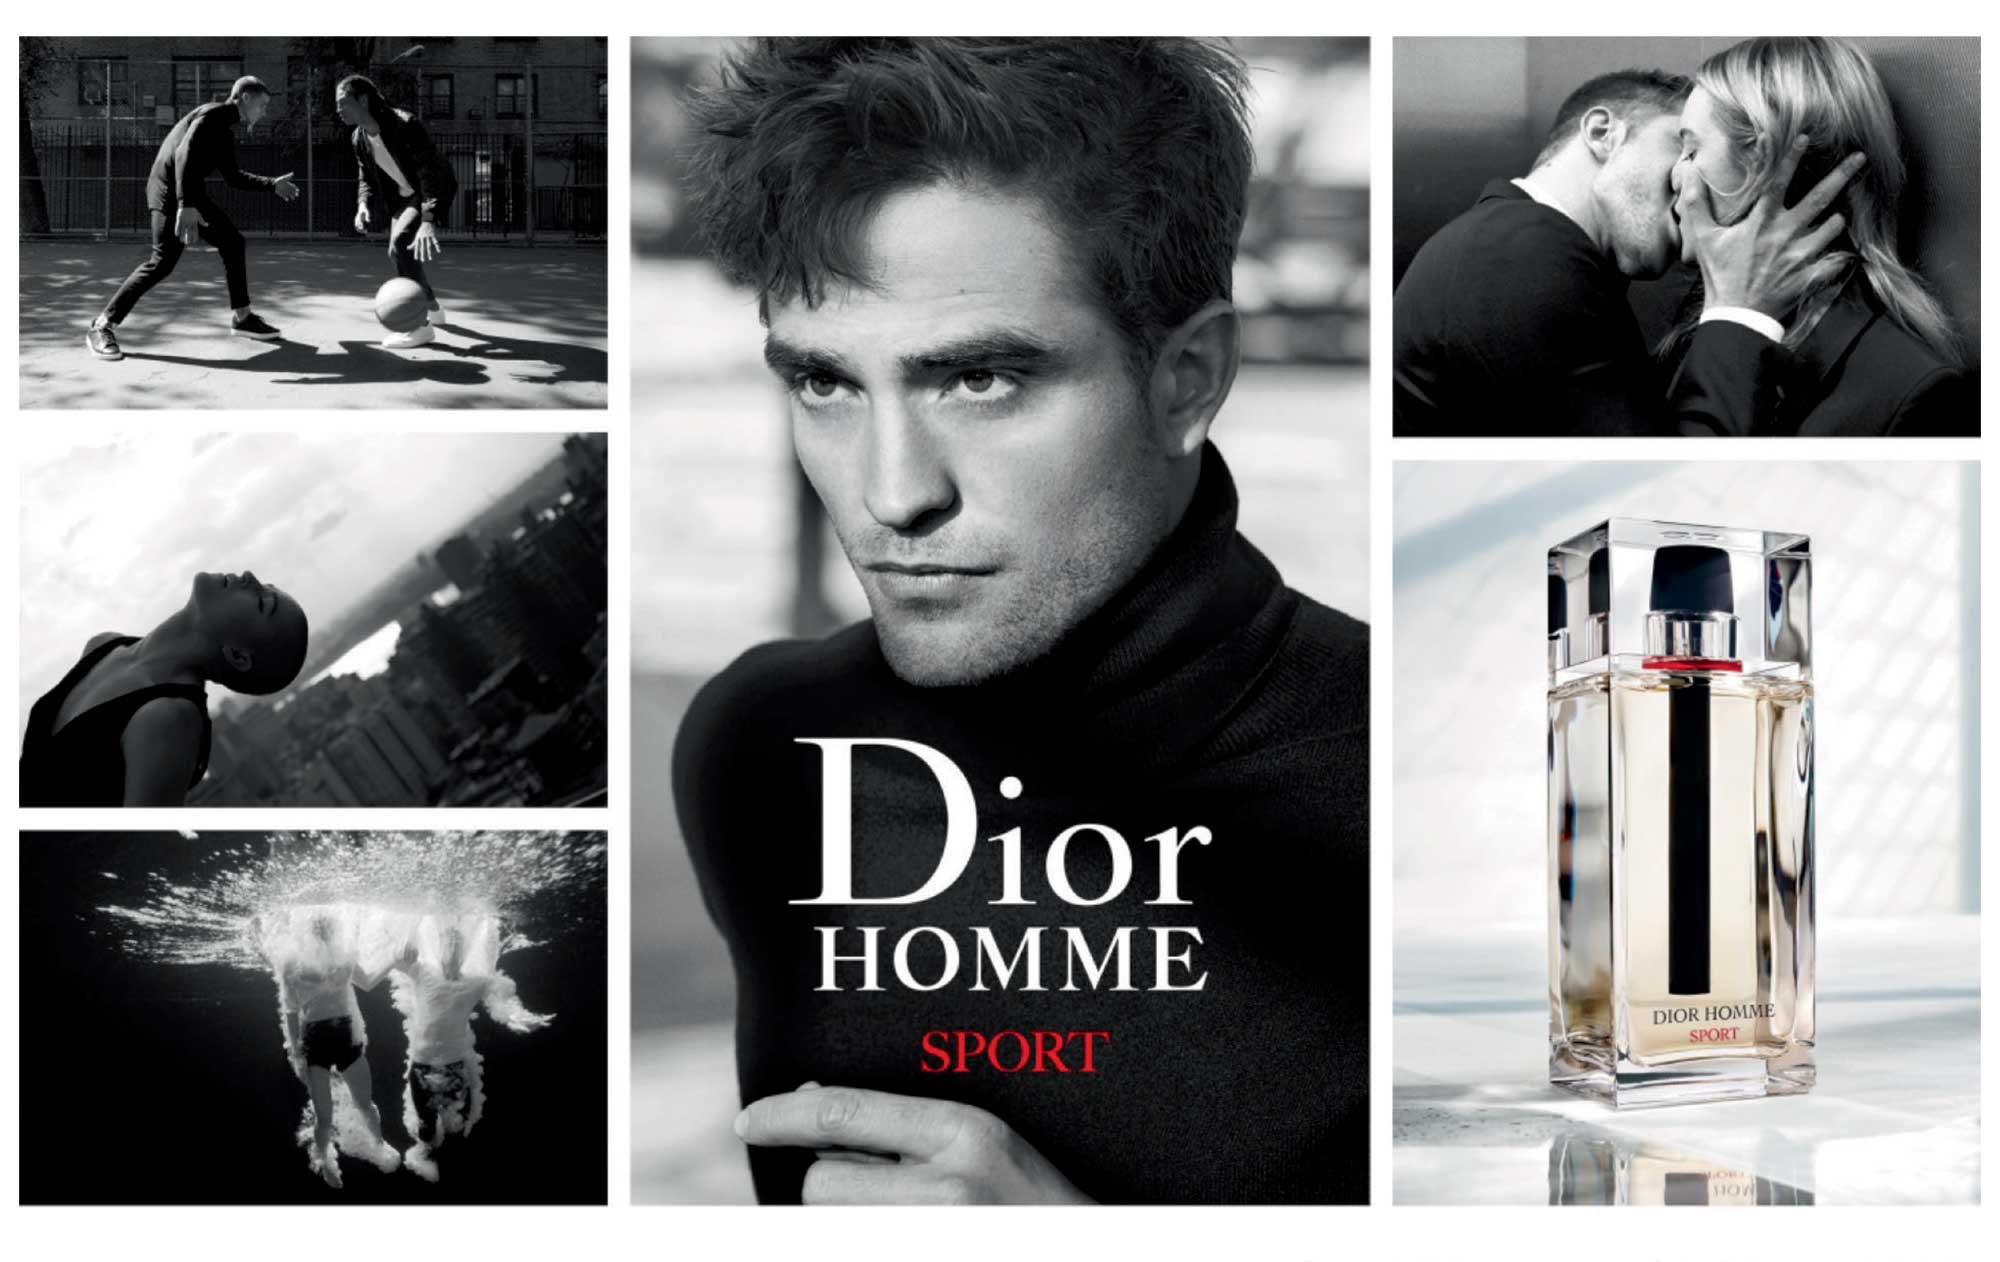 Dior Homme Sport 2017 Christian Dior cologne - a new fragrance for men 2017